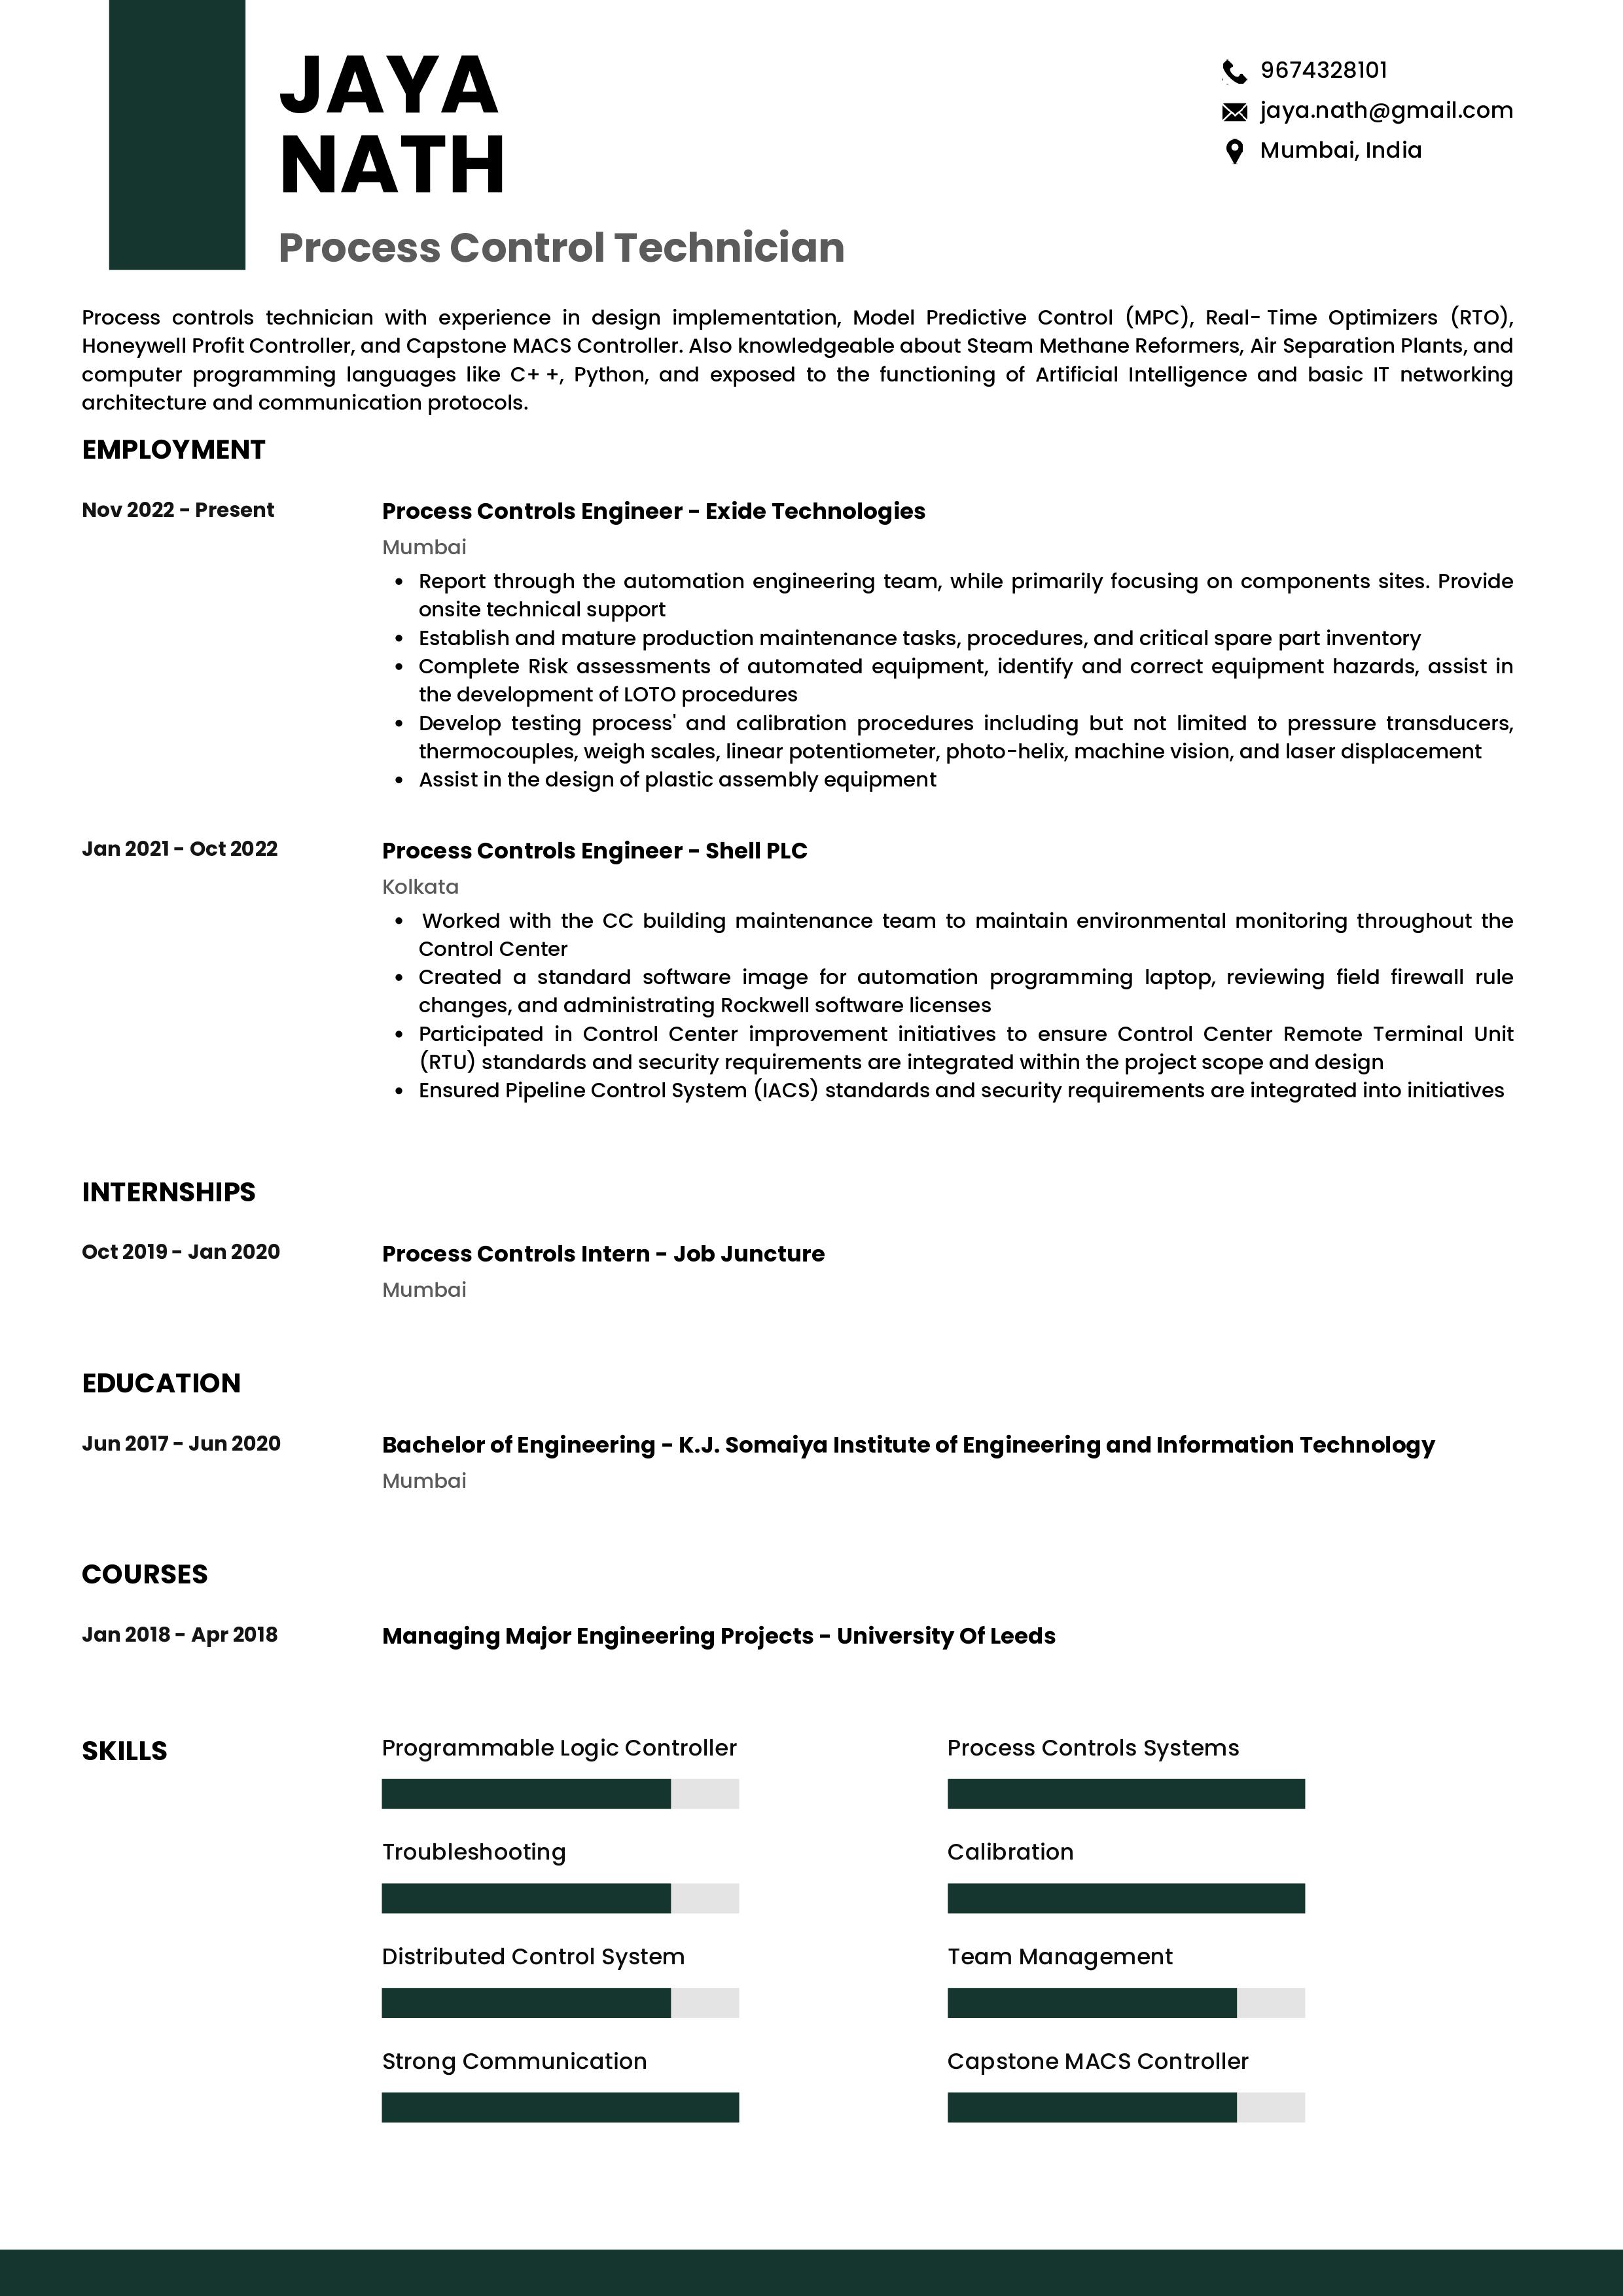 Resume of Process Controls Technician